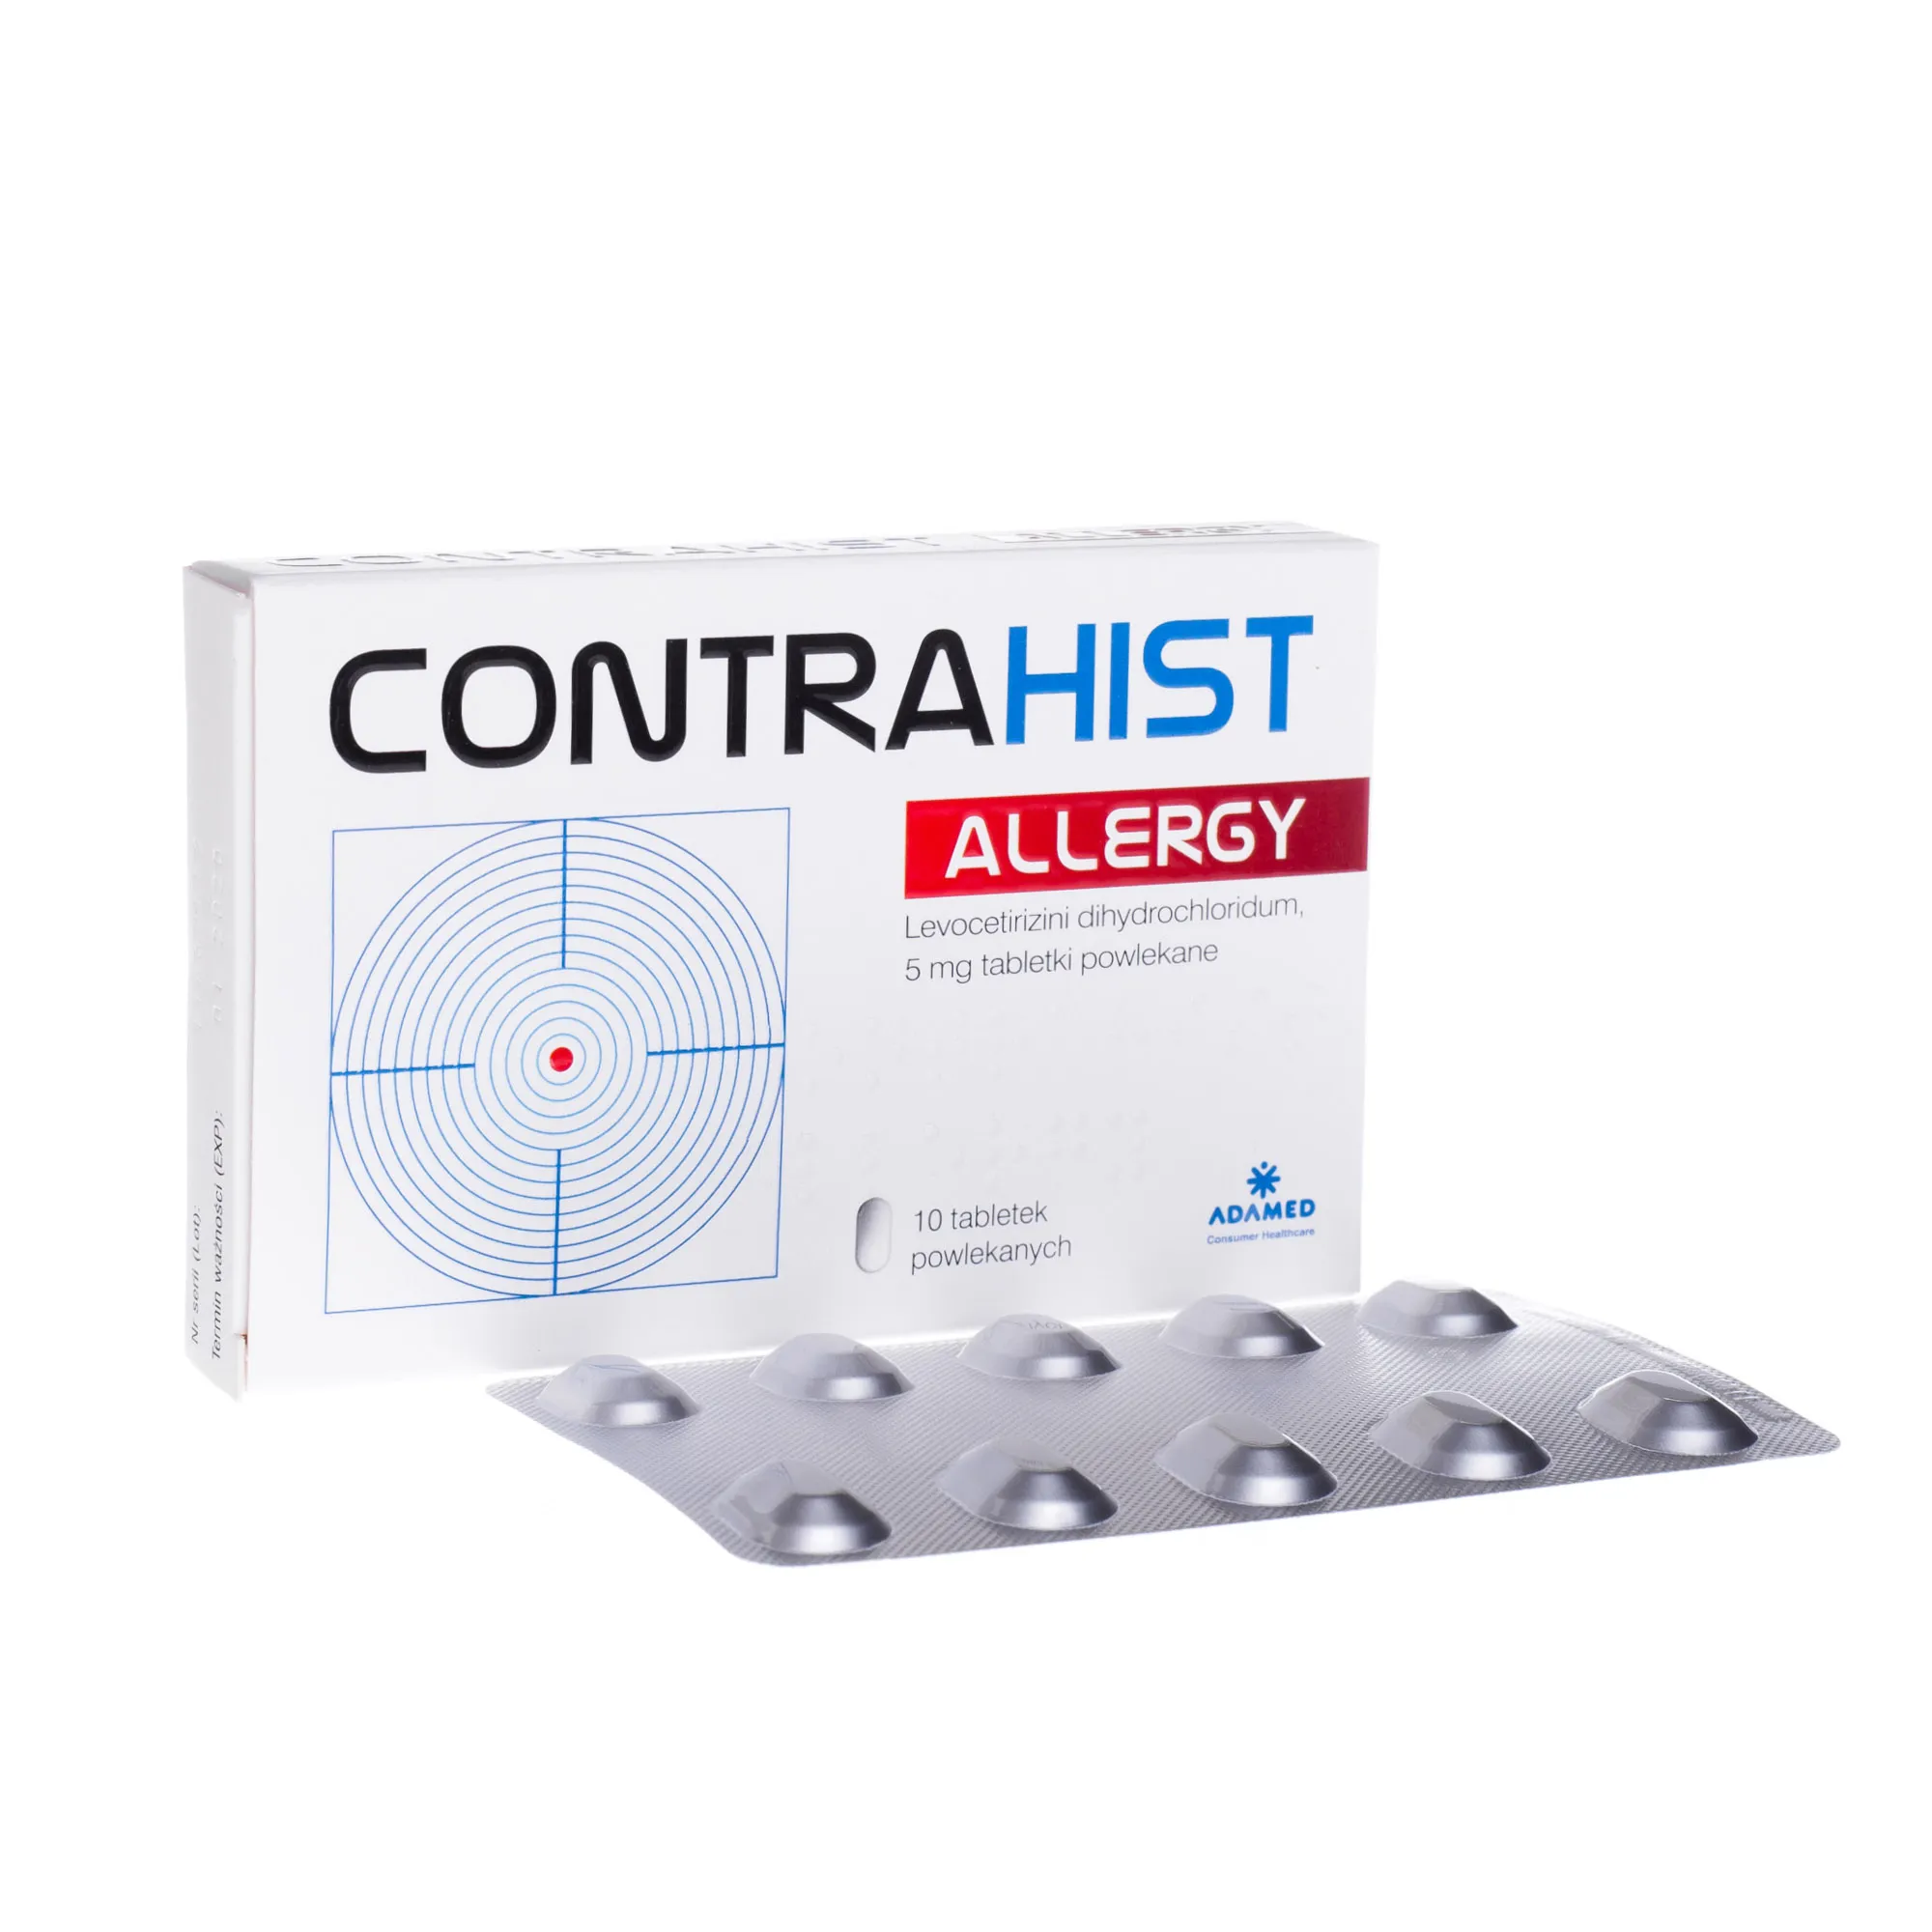 Contrahist Allergy 5 mg, 10 tabletek powlekanych